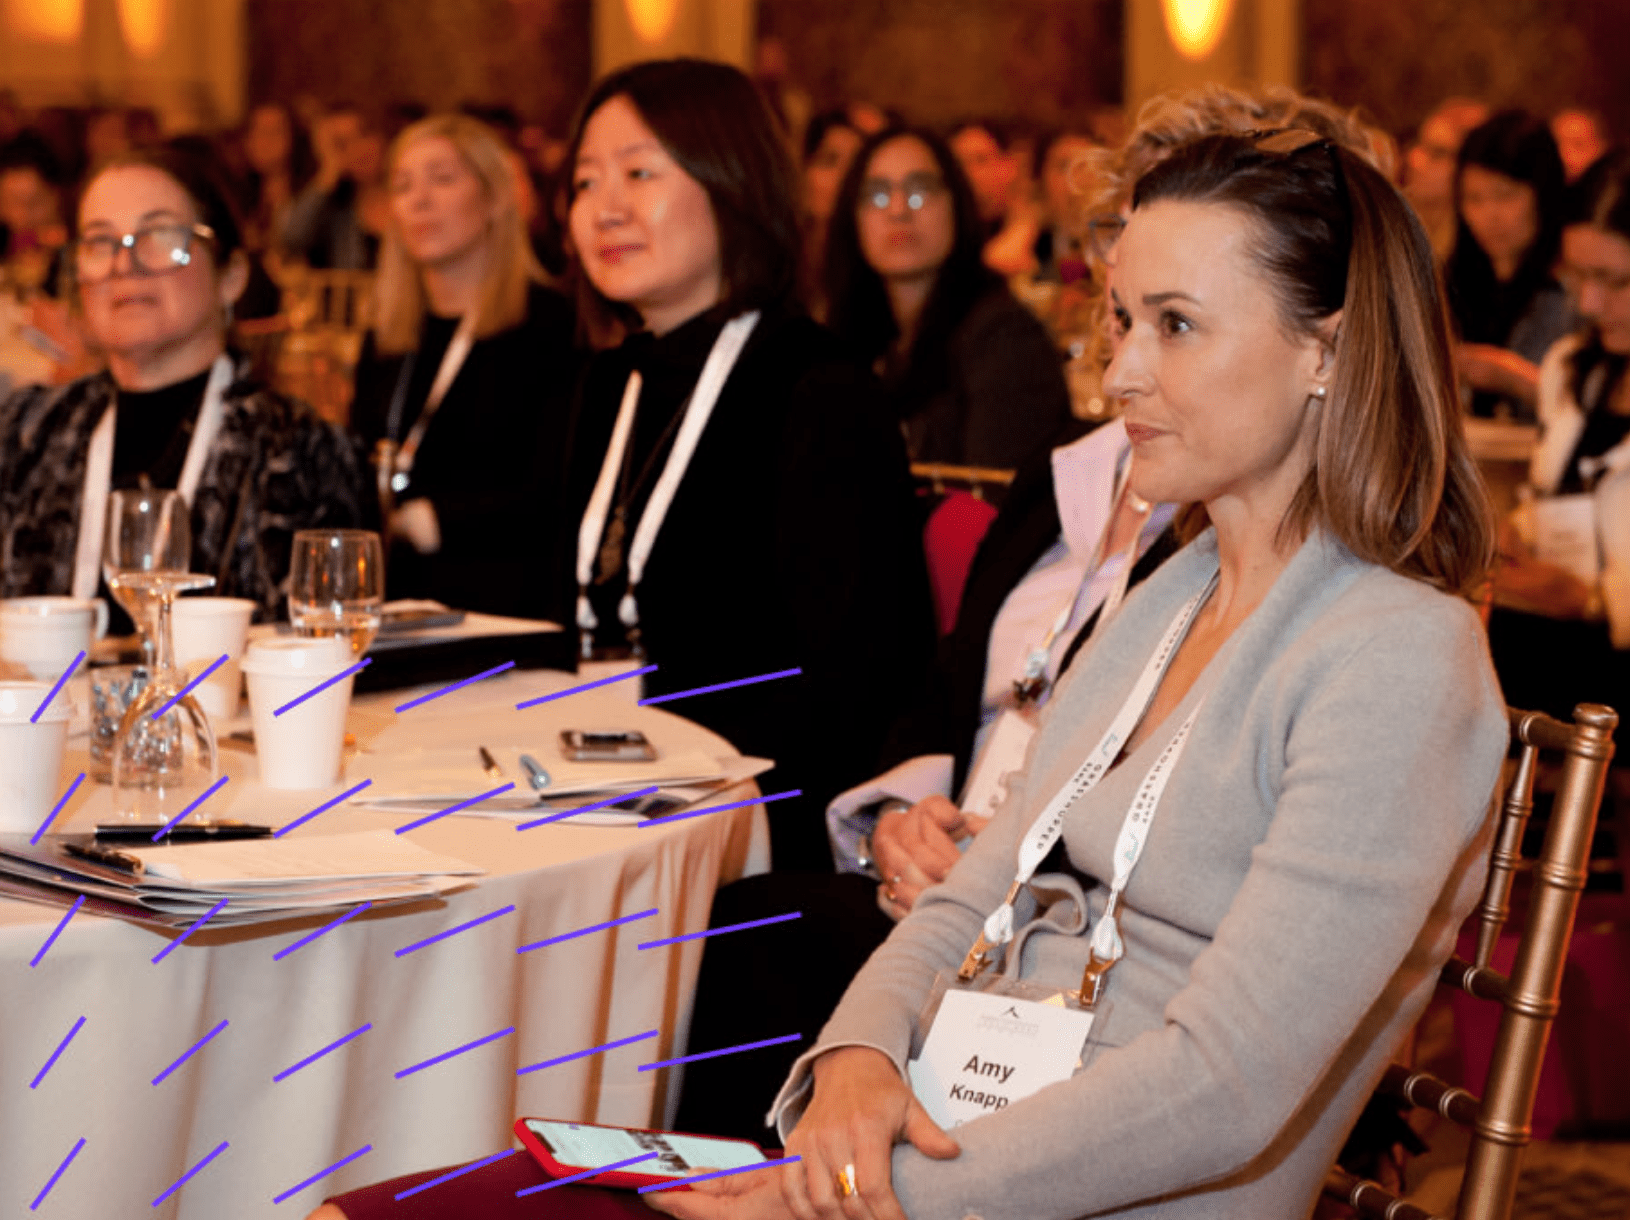 Women's Private Equity Summit NextBillion